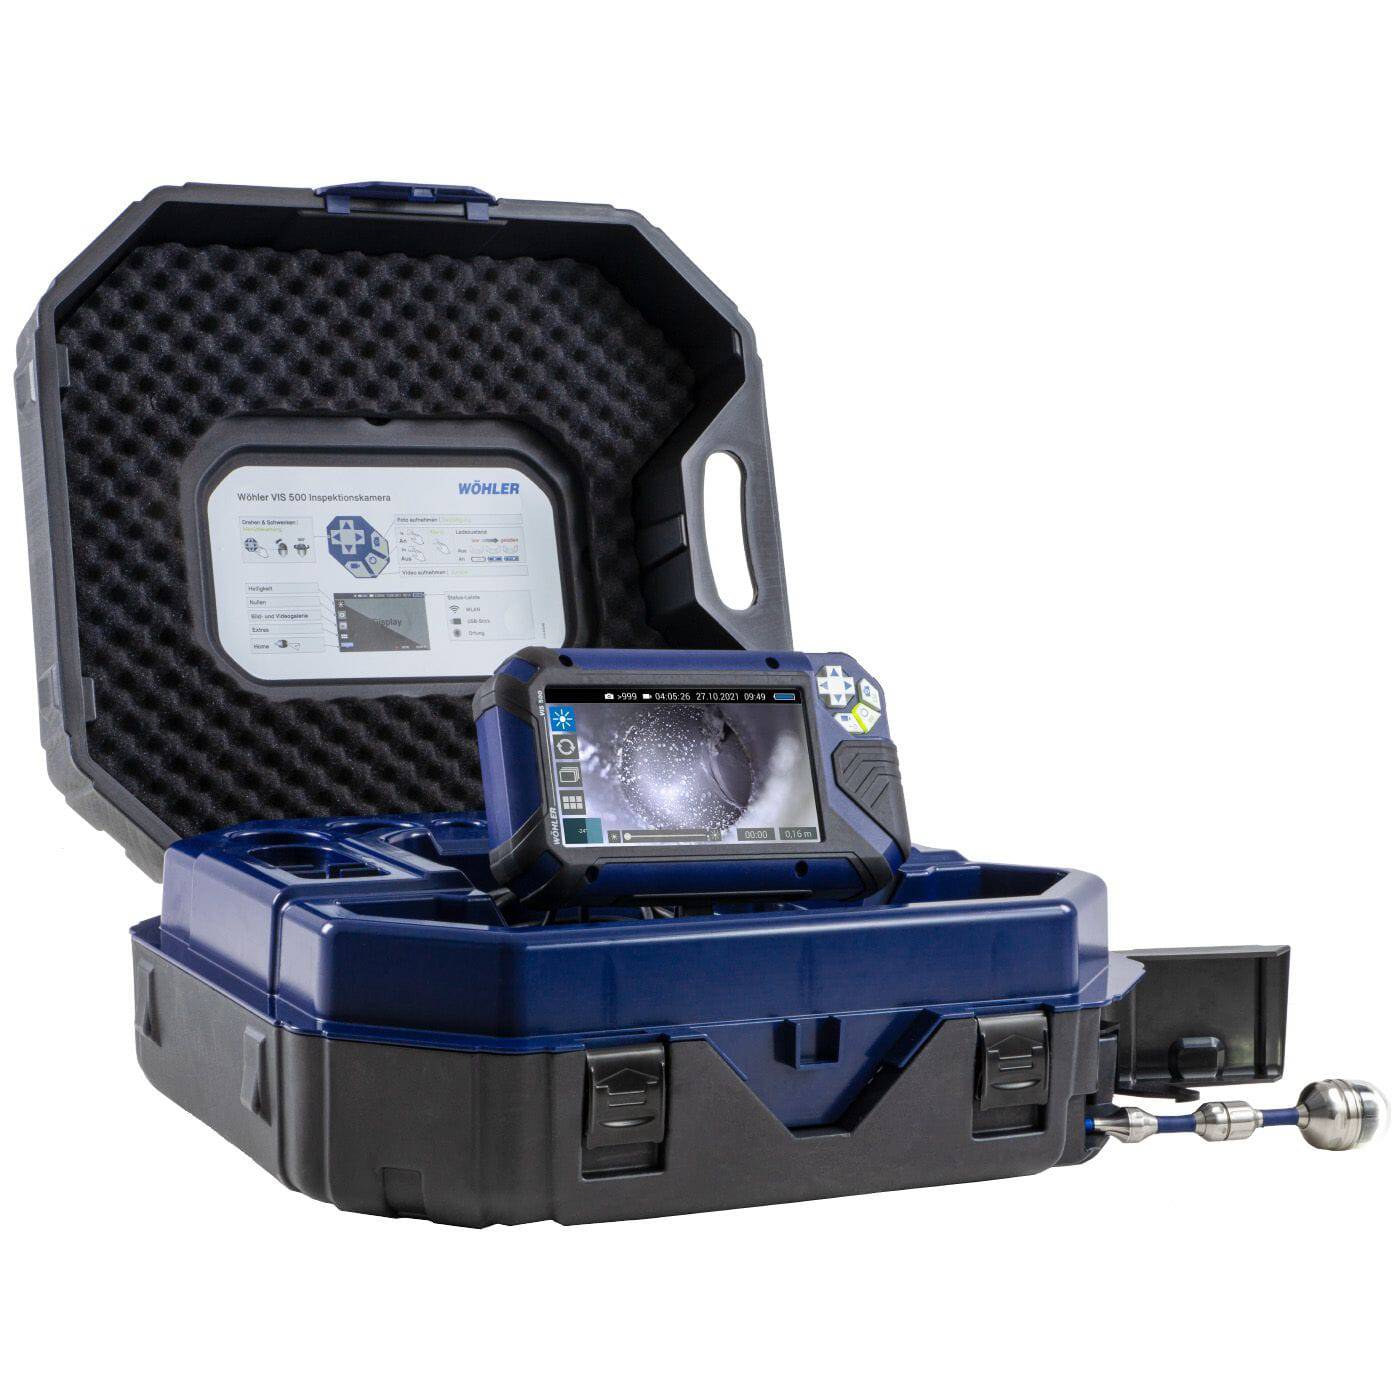 Wohler VIS 500 PLUS Camera Inspection System w/ 1.5" & 1" Camera Head- 11303 - InterTest, Inc.